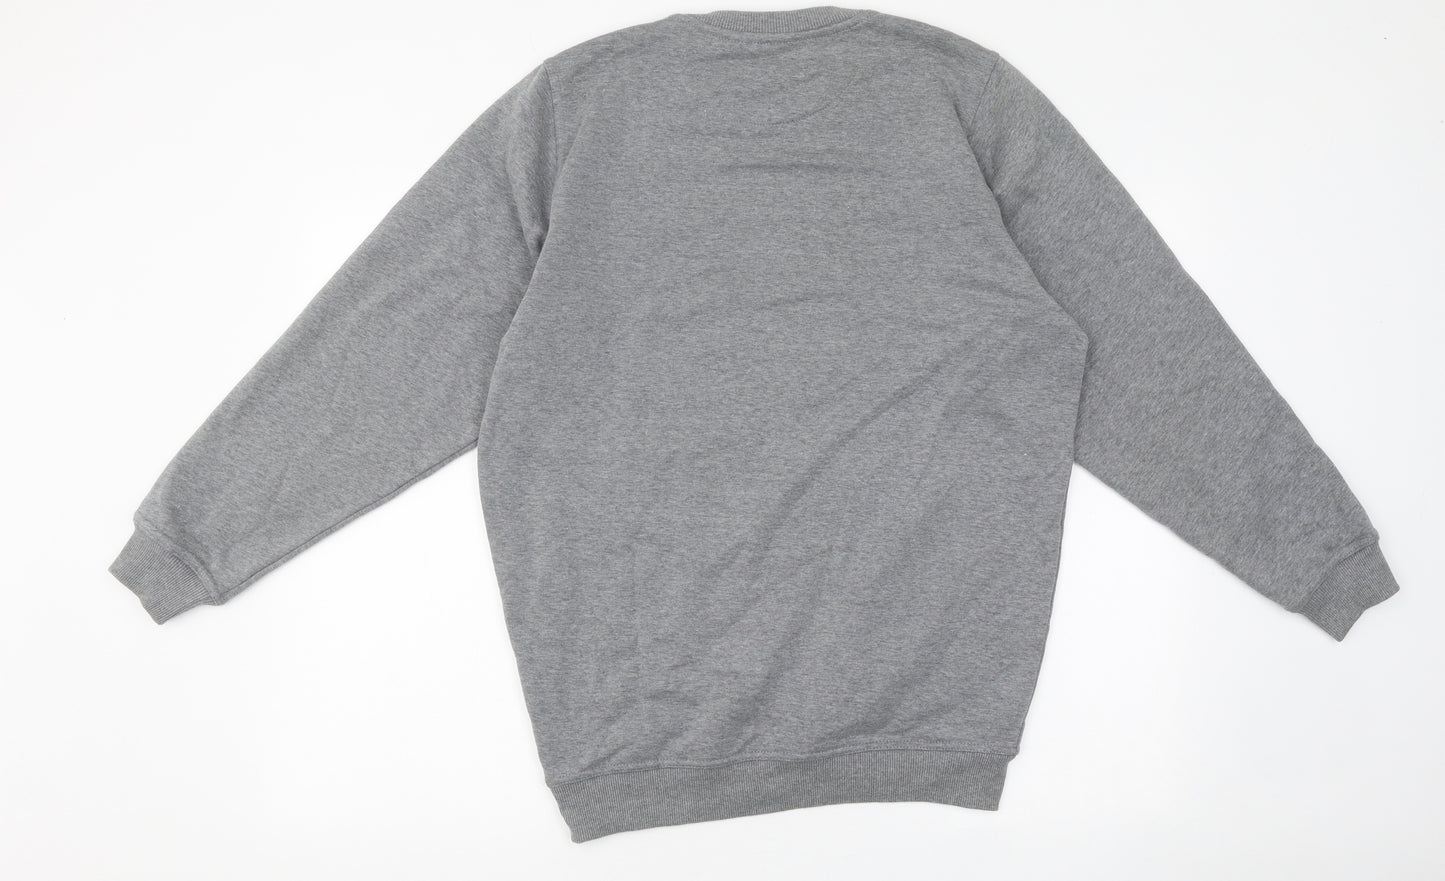 EWM Mens Grey Cotton Pullover Sweatshirt Size S